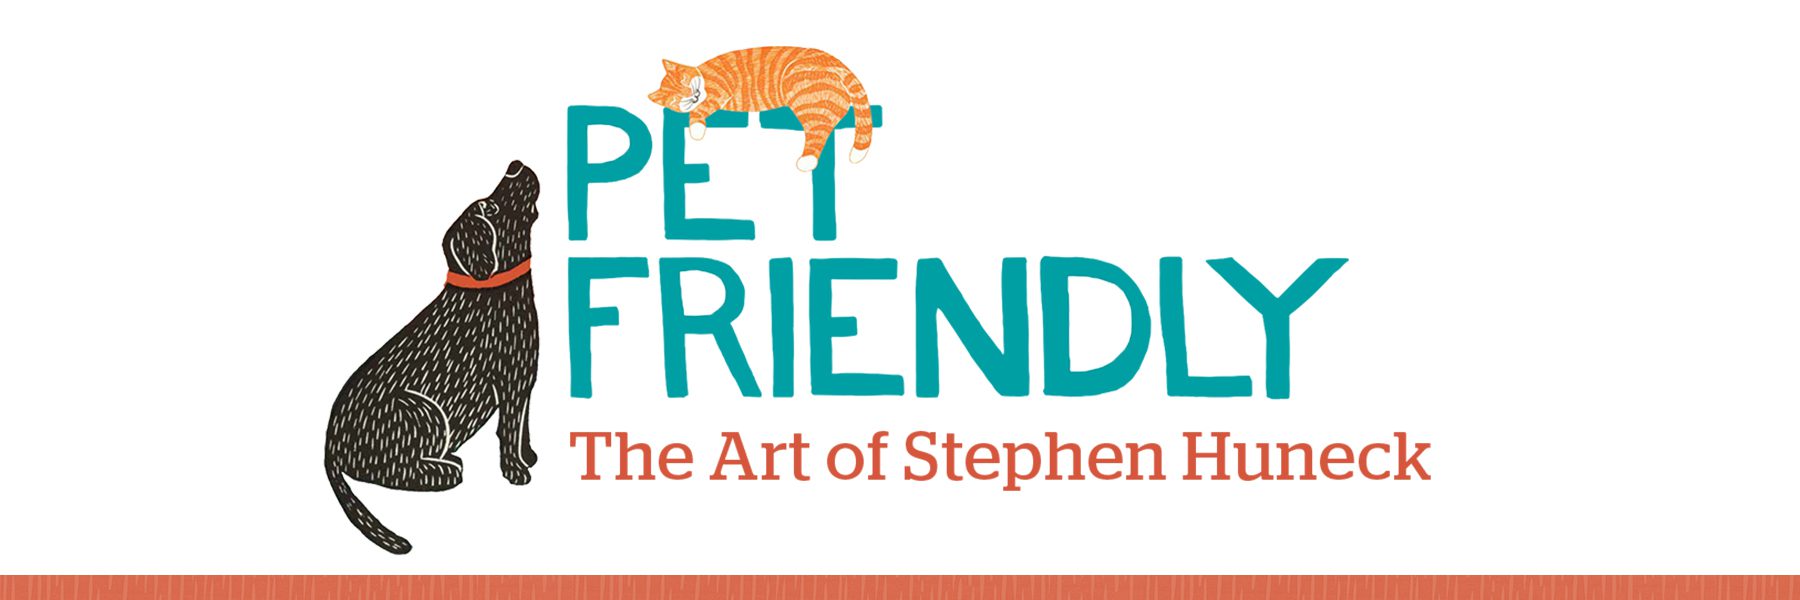 Pet Friendly: The Art of Stephen Huneck